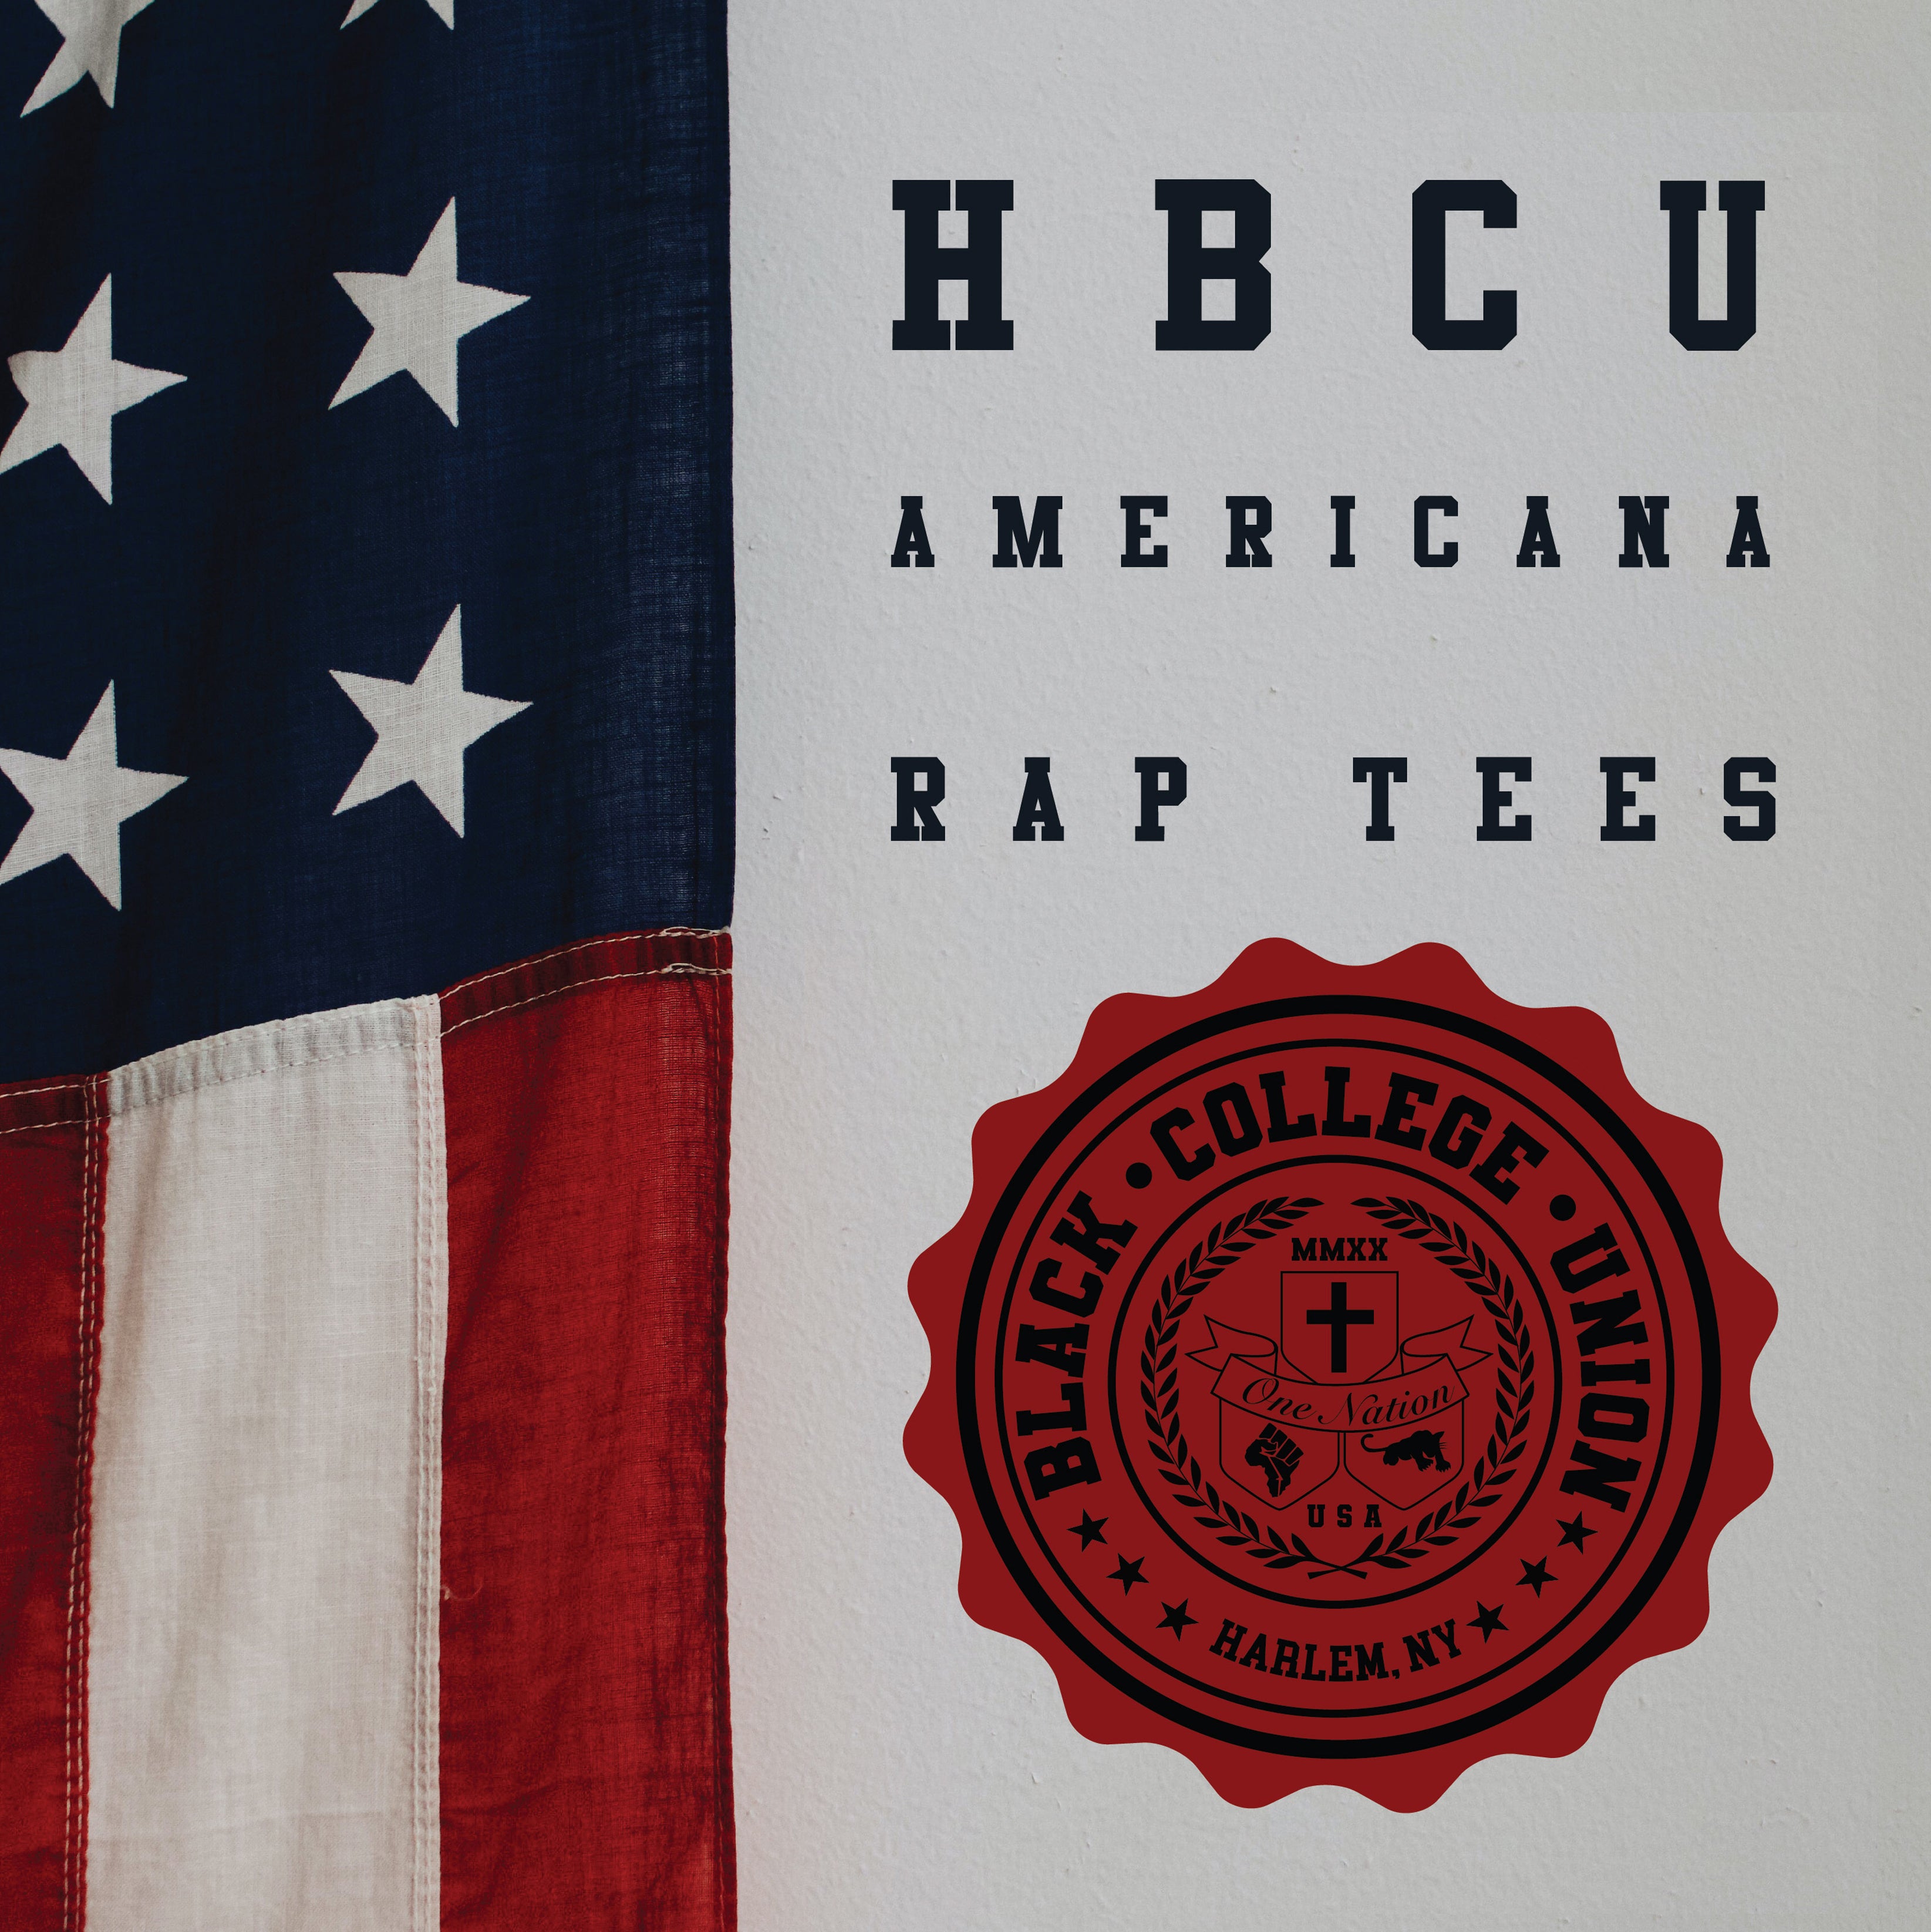 BCU X Champion Original HBCU Americana Rap Tee - Philander Smith [PSC]